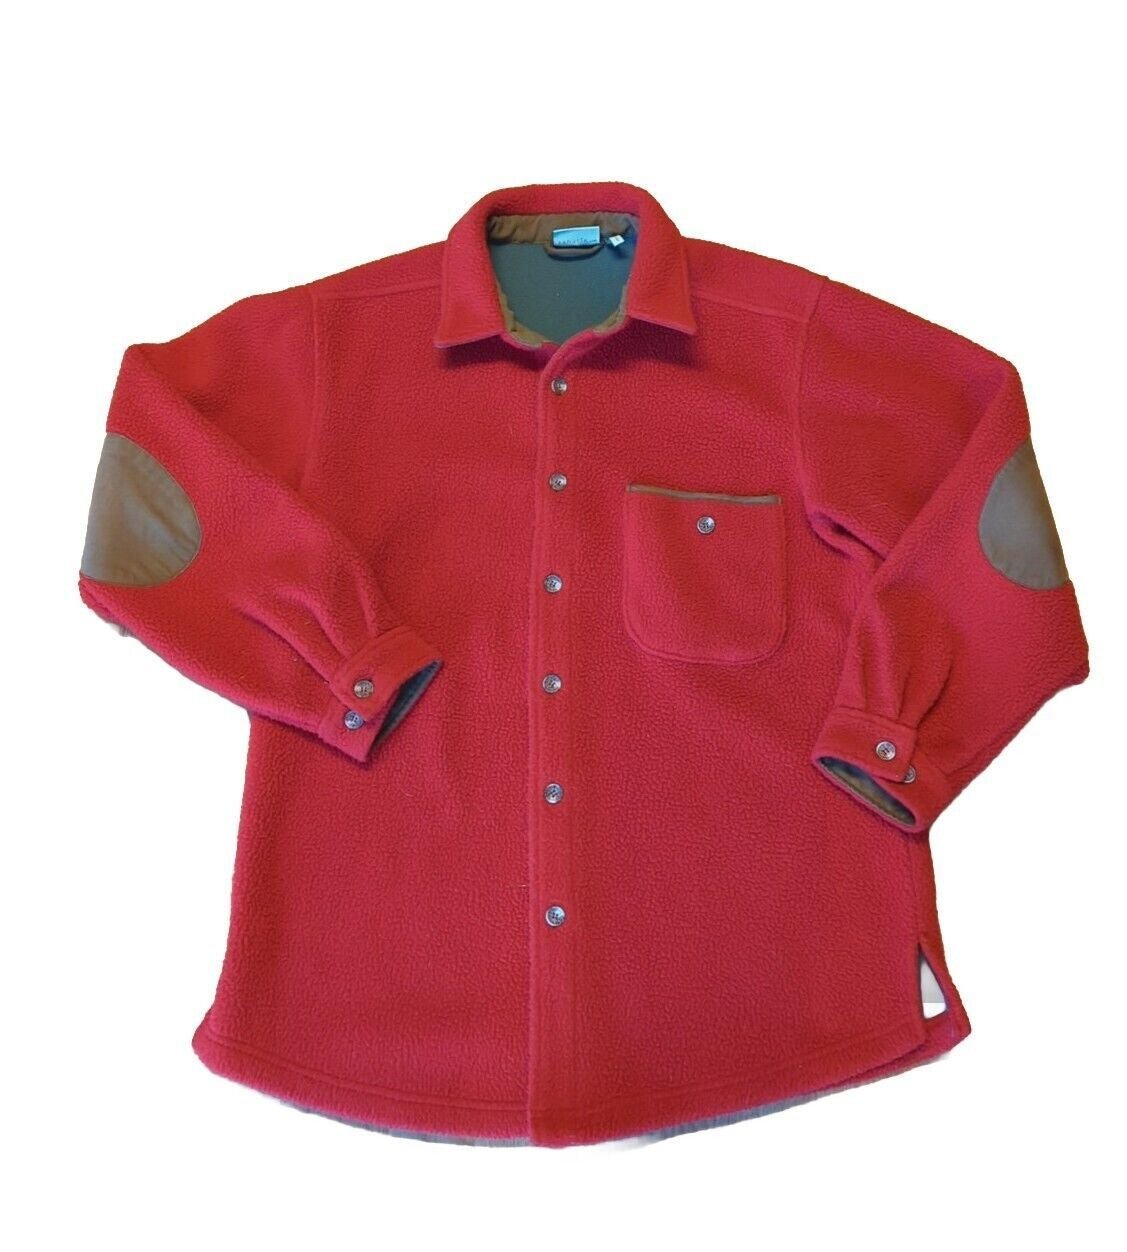 Sahalie Fleece Jacket Womens Small Red Elbow Pads Button Up Outdoors Heavy duFc6dIFs